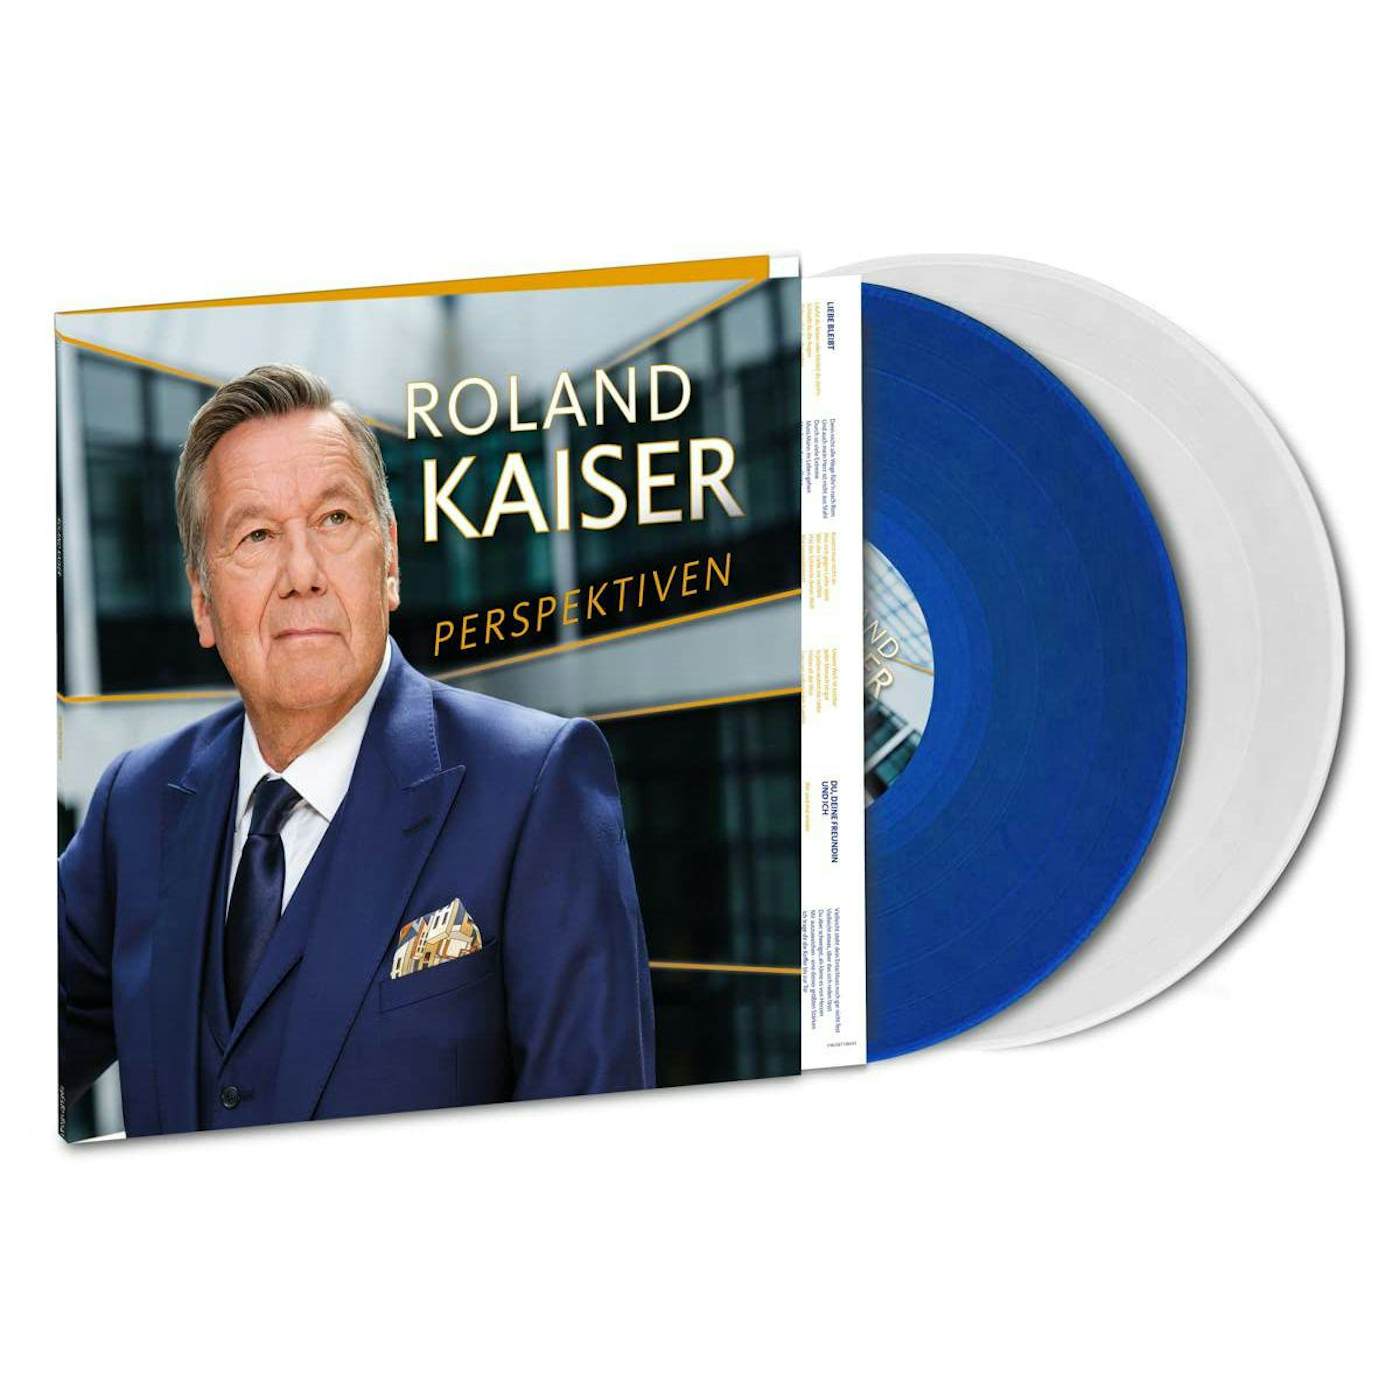 Roland Kaiser Perspektiven (2LP) Vinyl Record